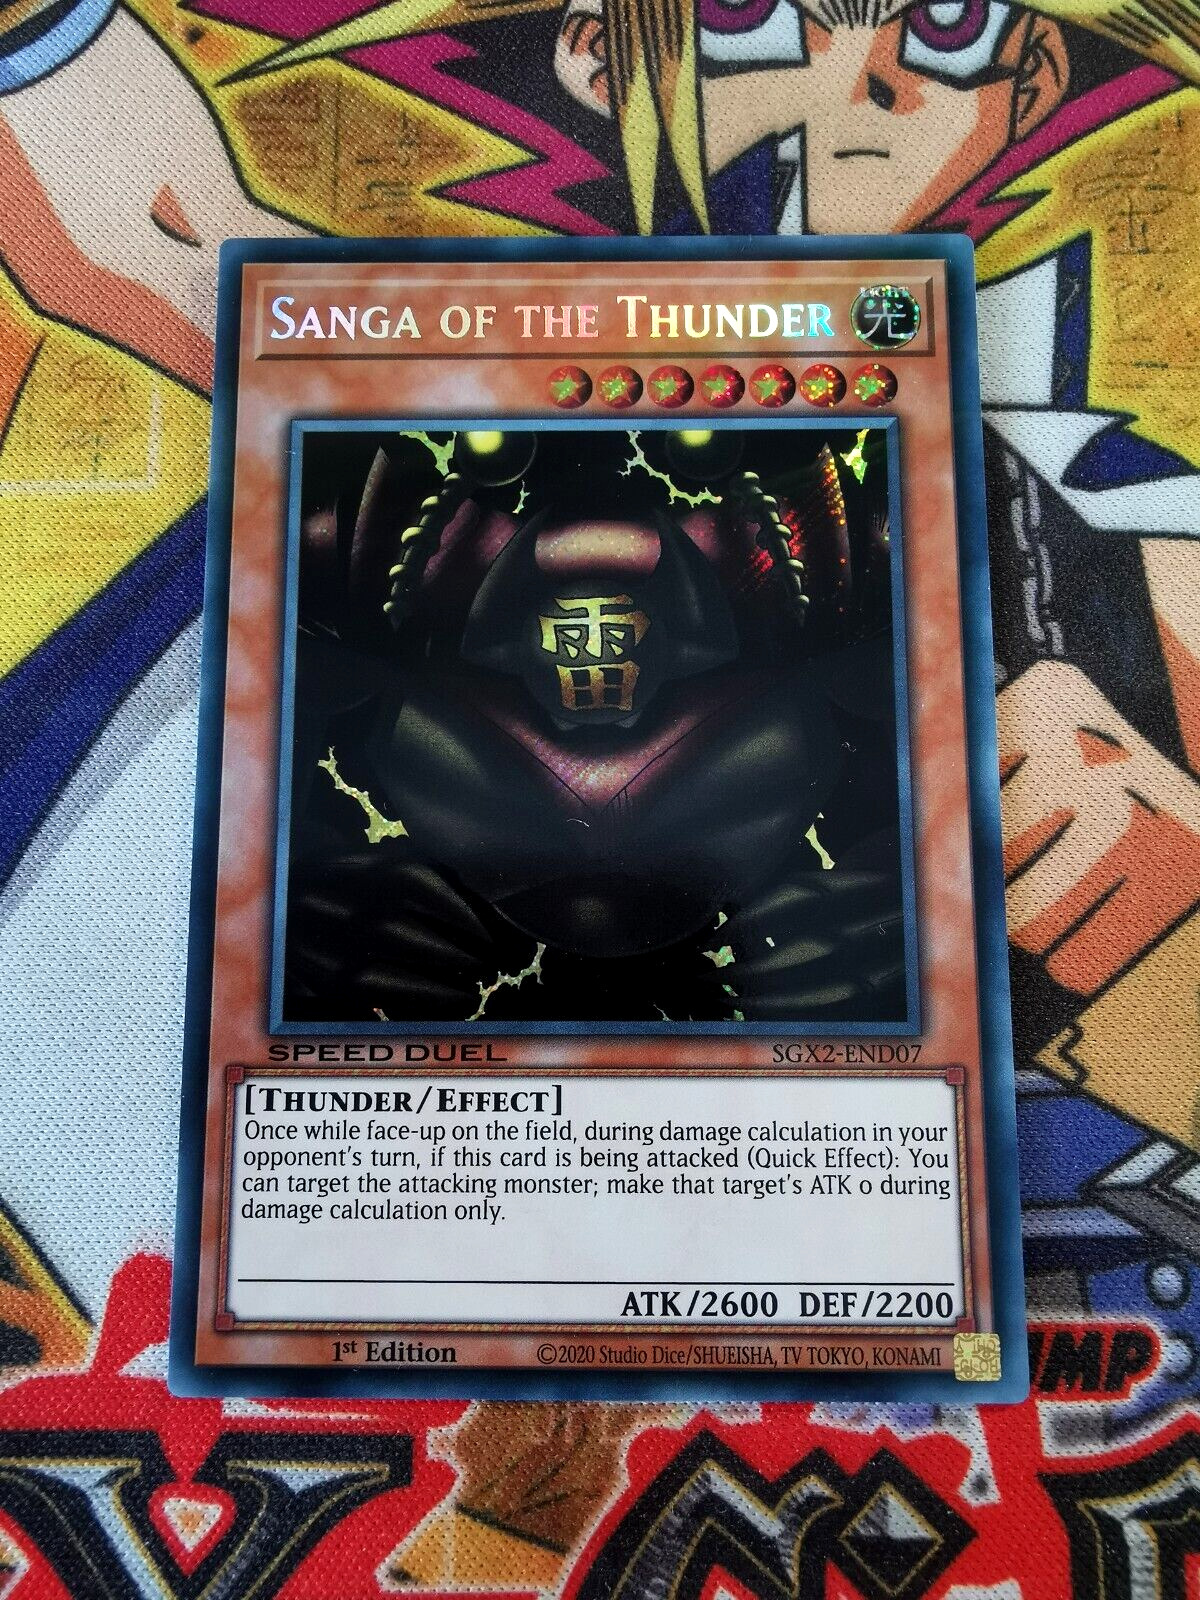 Sanga of the Thunder sgx2-end07 1st Edition (NEW) Secret Rare Yu-Gi-Oh